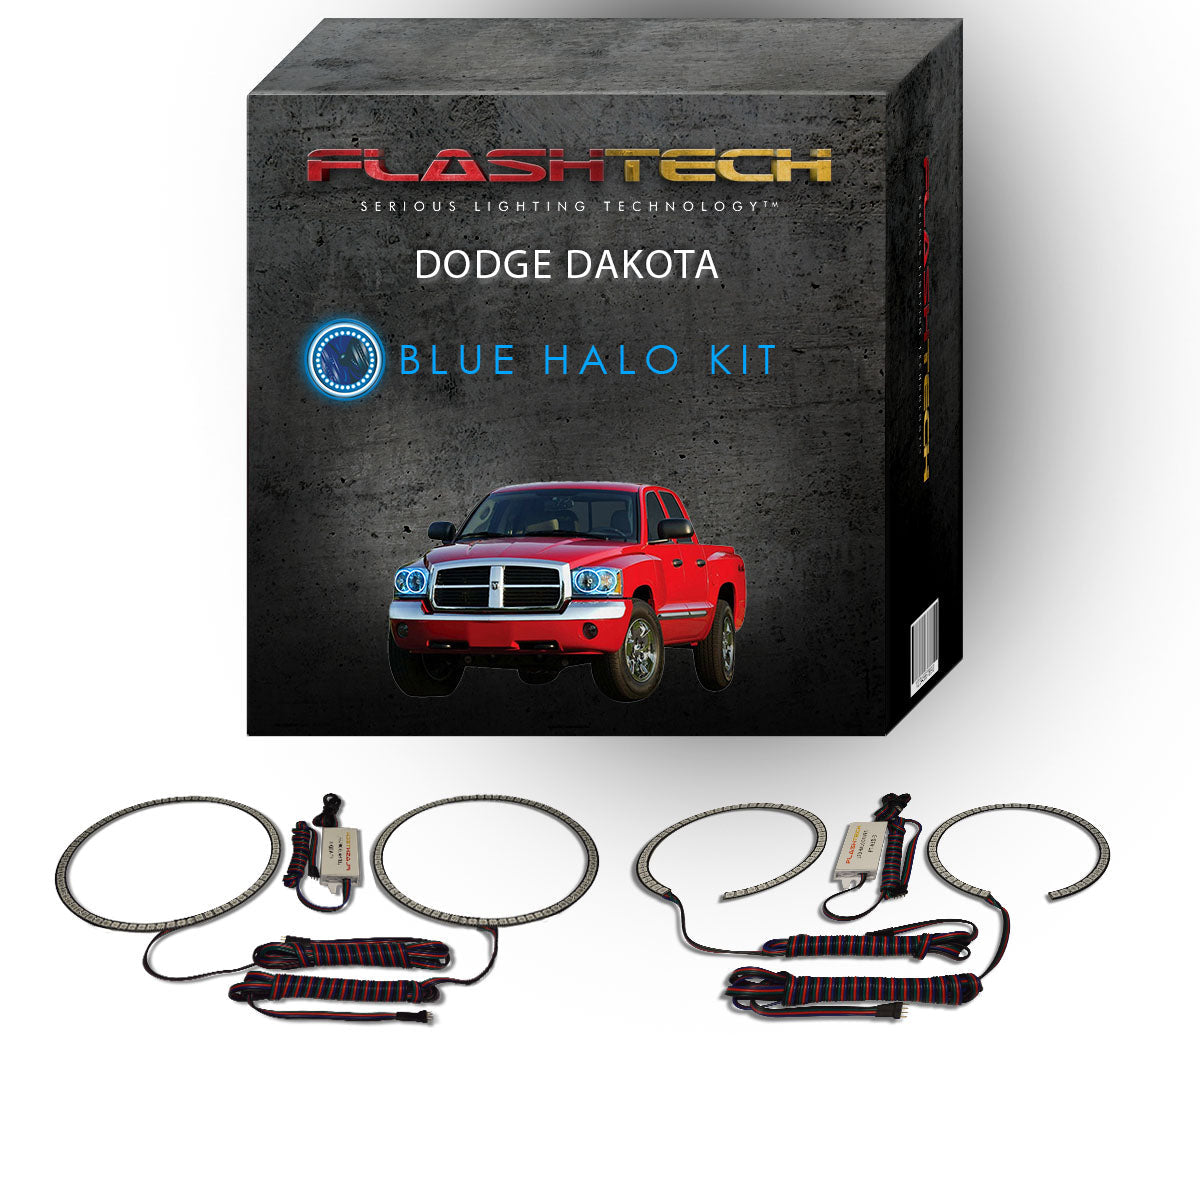 Dodge-Dakota-2005, 2006, 2007-LED-Halo-Headlights-RGB-No Remote-DO-DK0507-V3H